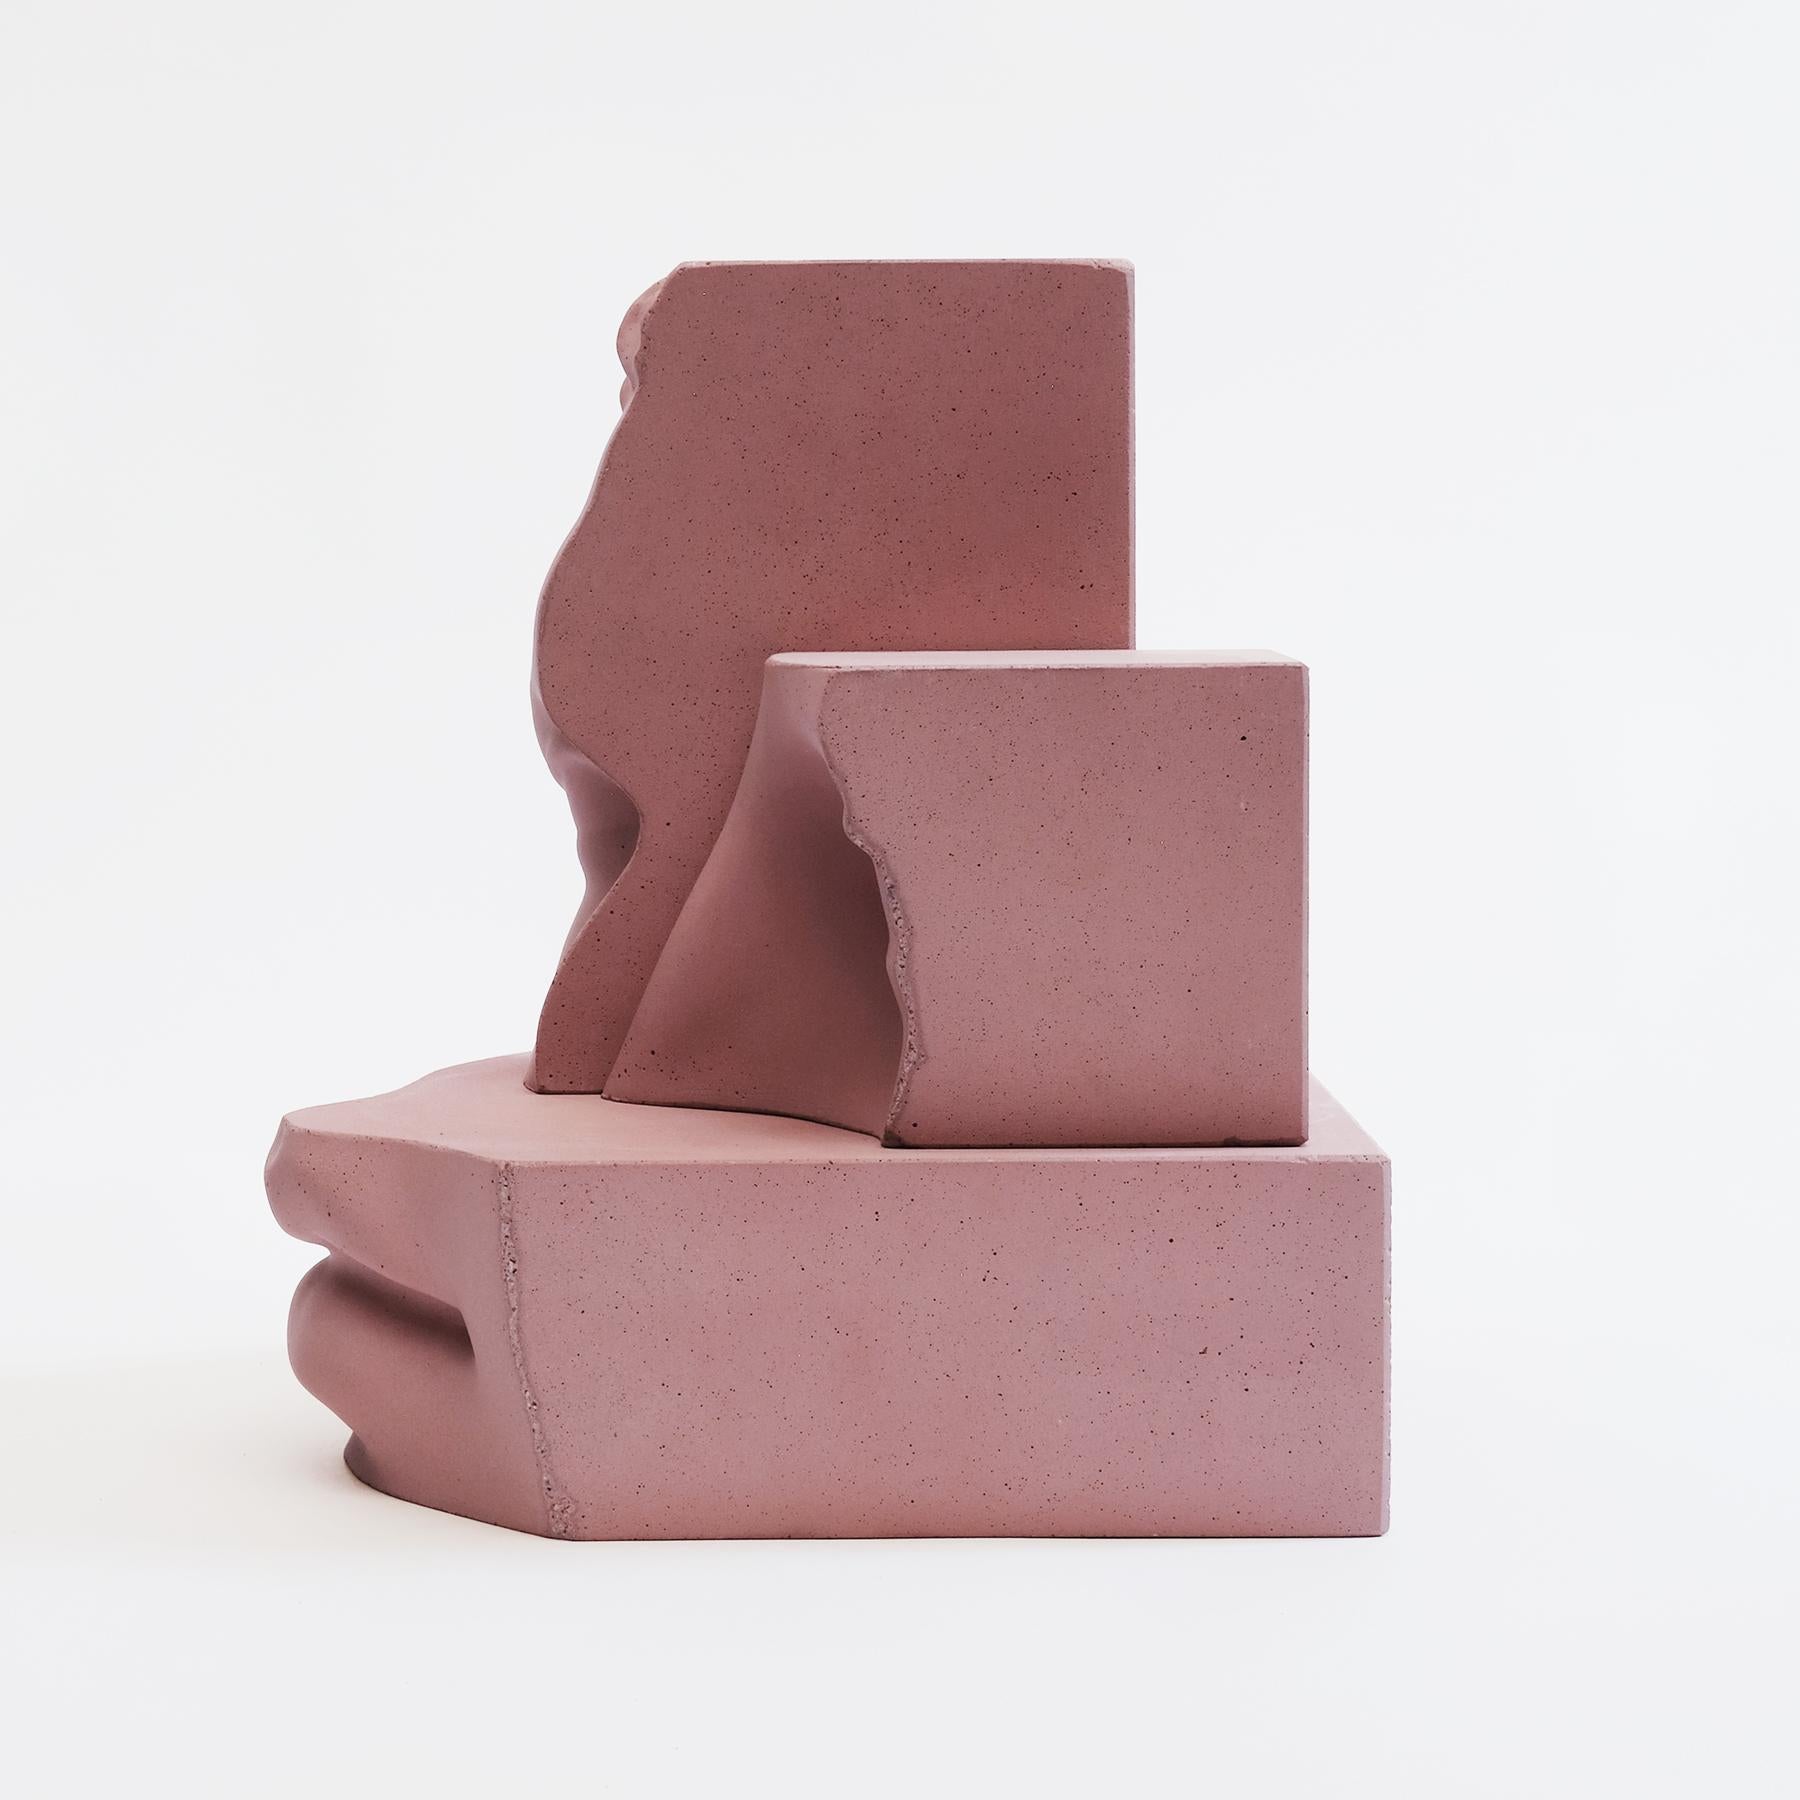 Contemporary Hermes - Rose - Design Sculpture Paolo Giordano Concrete Cement Cast For Sale